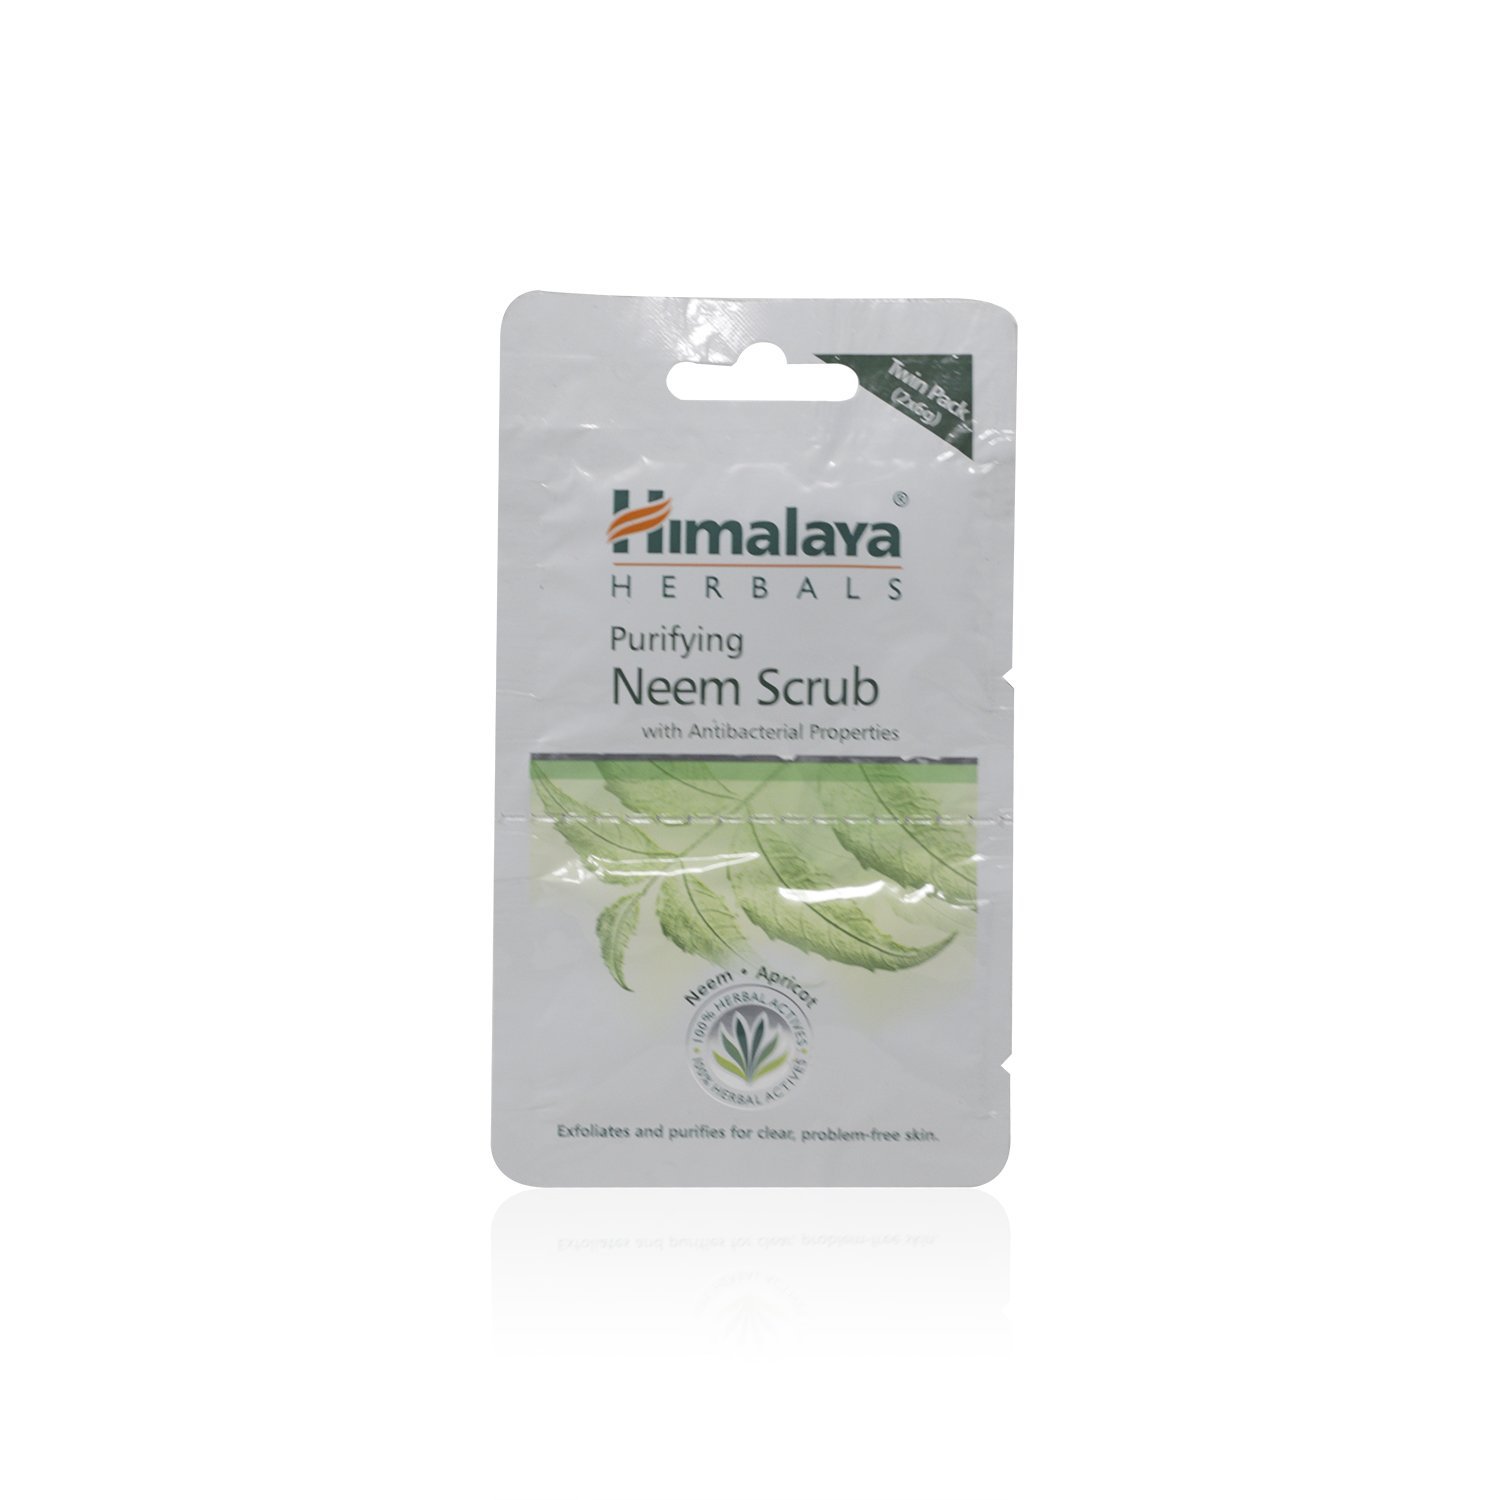 Himalaya neem scrub pouch 8gm each pack of 20